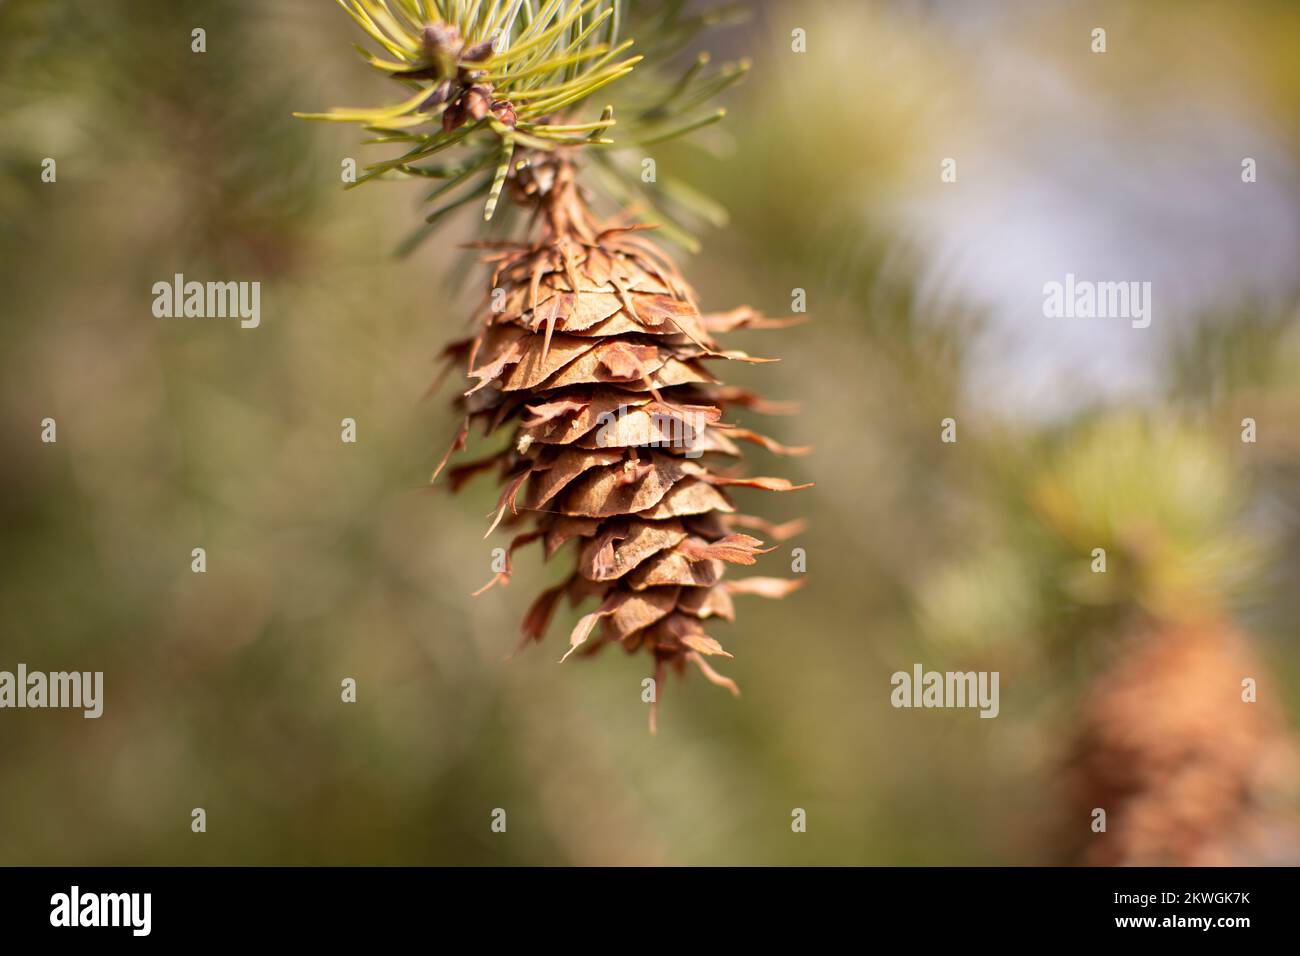 Rocky Mountain Douglas-fir (Pseudotsuga menziesii var. glauca) cone on a branch. Kingdom: Plantae Clade: Tracheophytes Division: Pinophyta Class: Pino Stock Photo